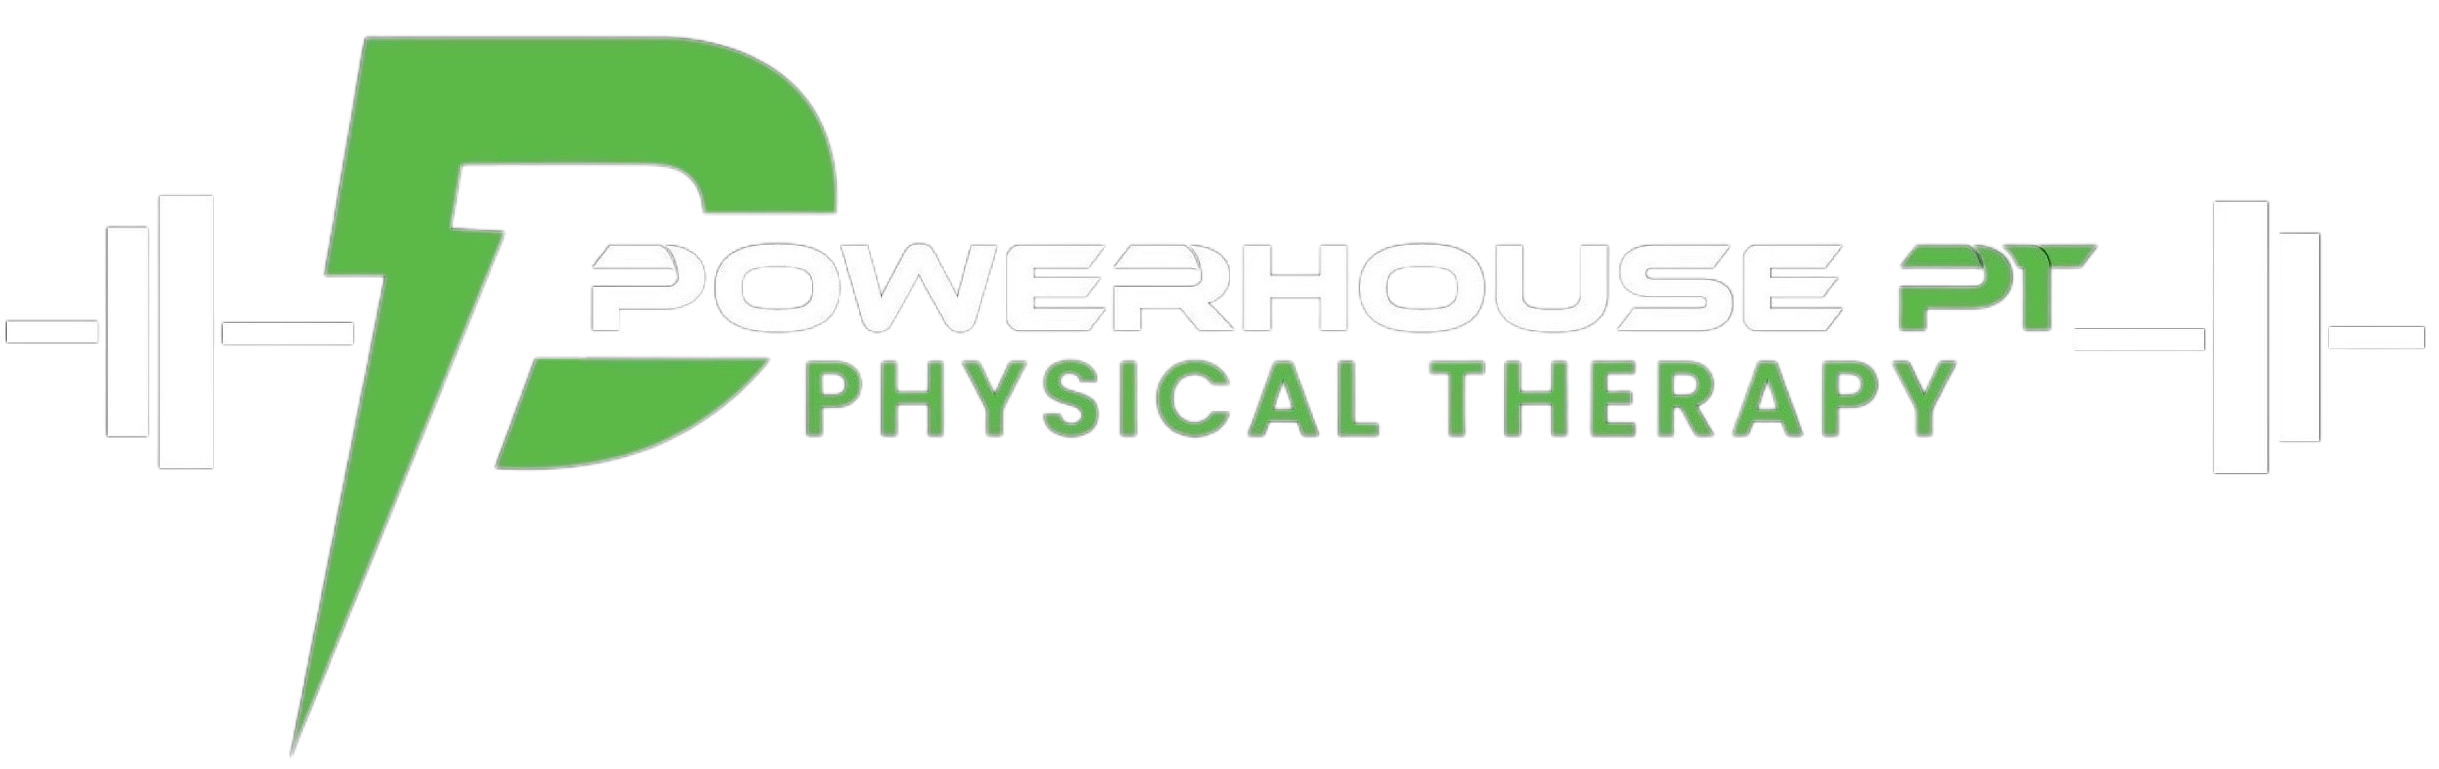 powerhouse pt physical therapy original logo